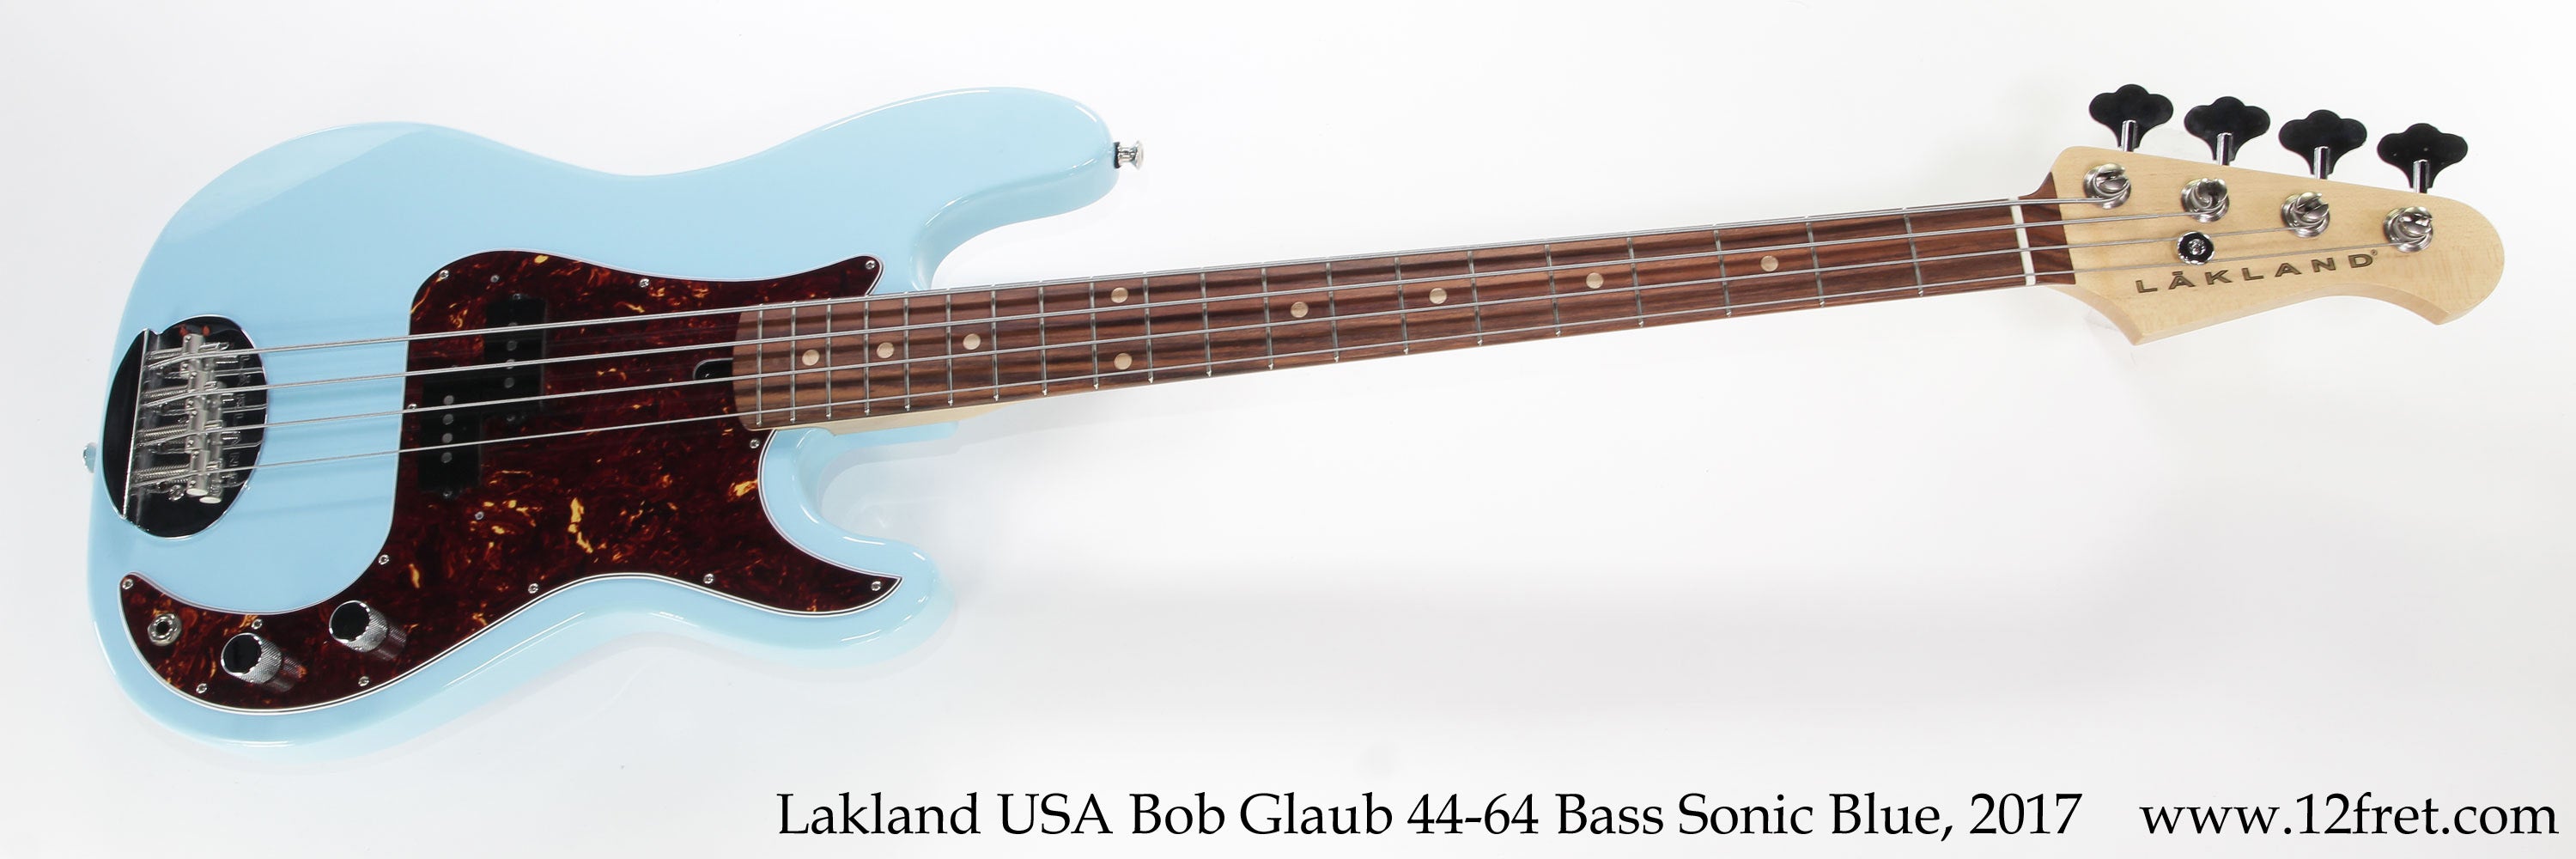 Lakland USA Bob Glaub 44-64 Bass Sonic Blue, 2017 - The Twelfth Fret